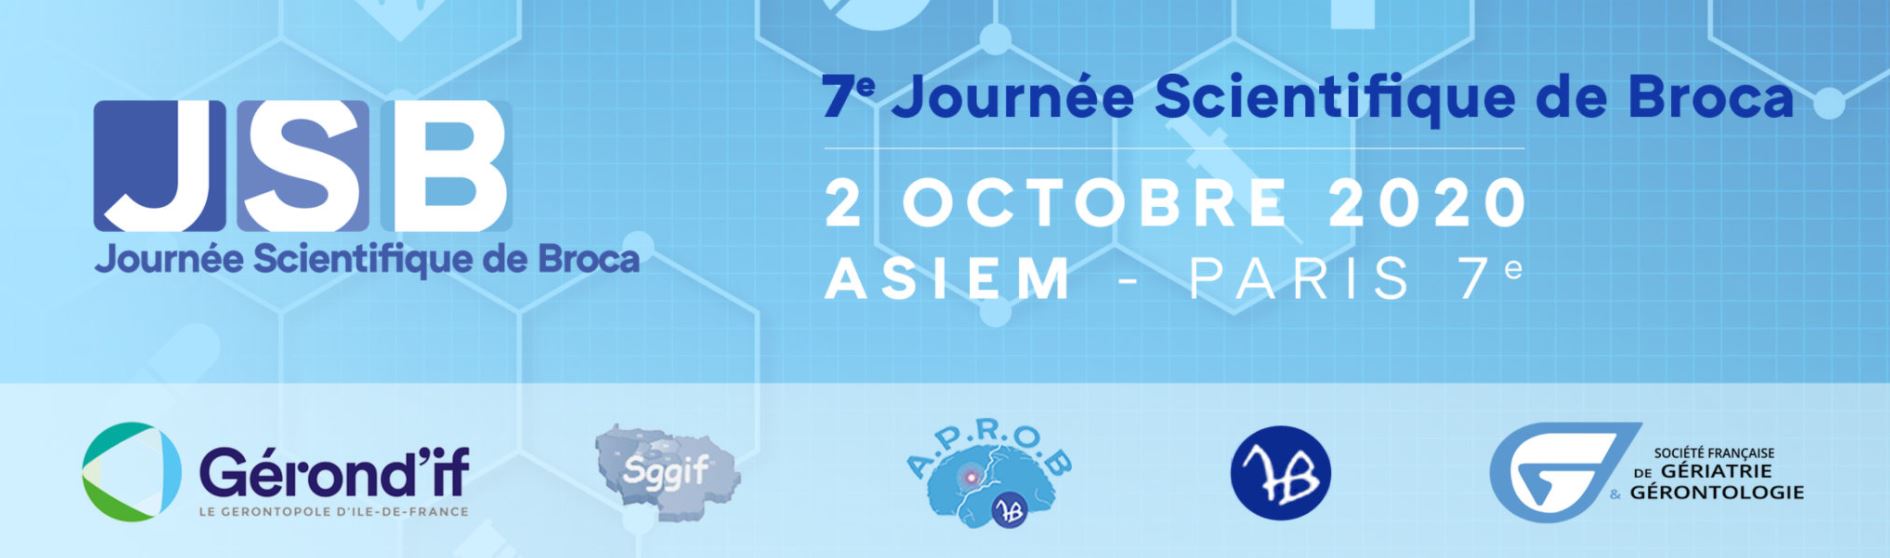 7th Broca Scientific Day - JSB 2020